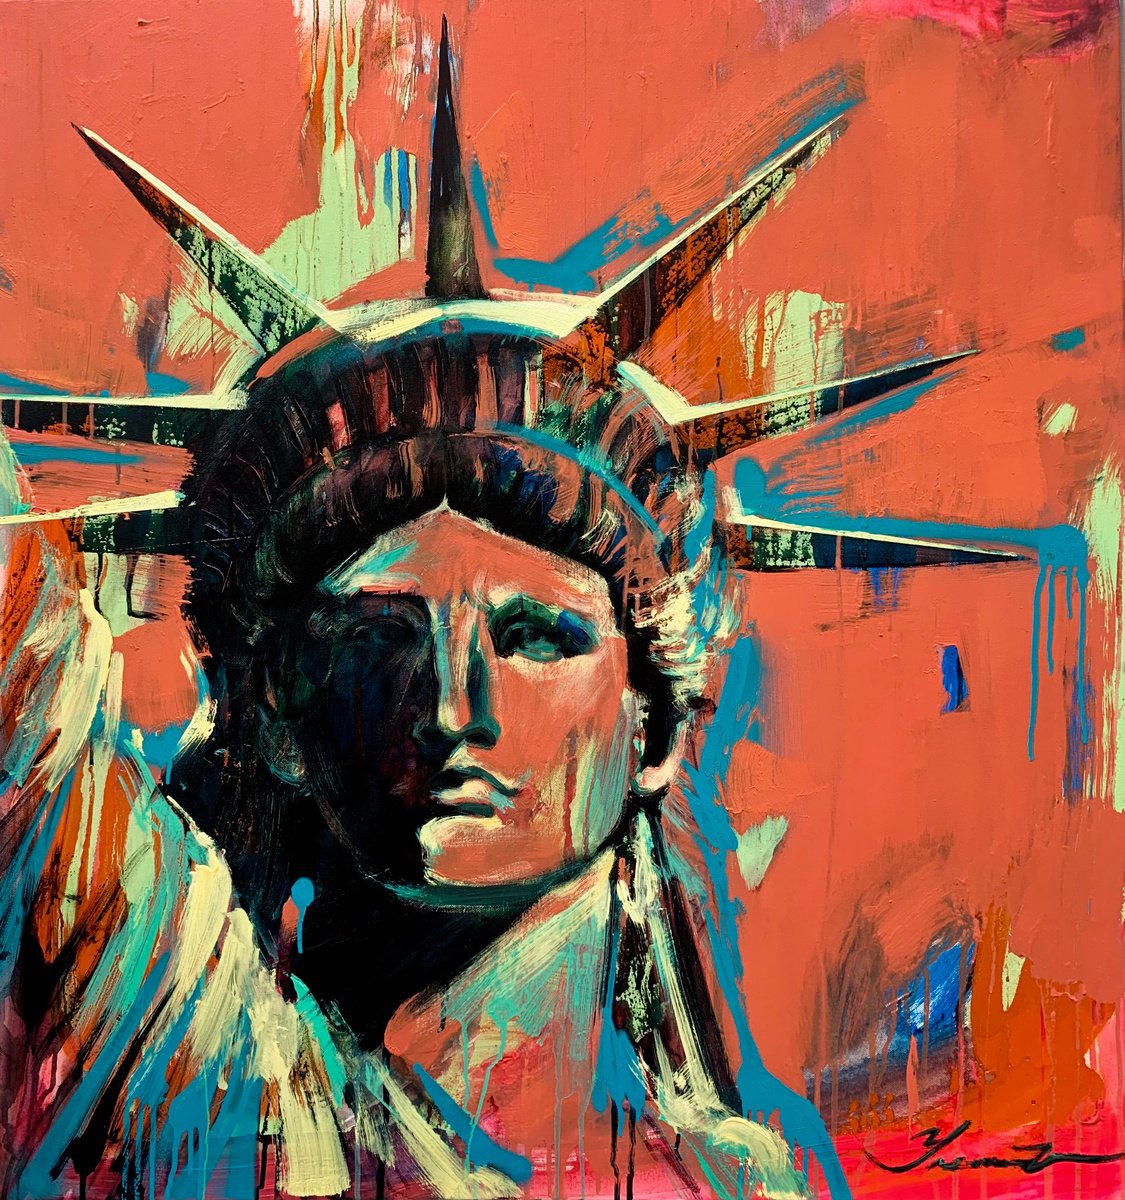 Big bright painting - Statue of Liberty - USA - Pop Art - Urban Art - Street Art - New Y... by Yaroslav Yasenev